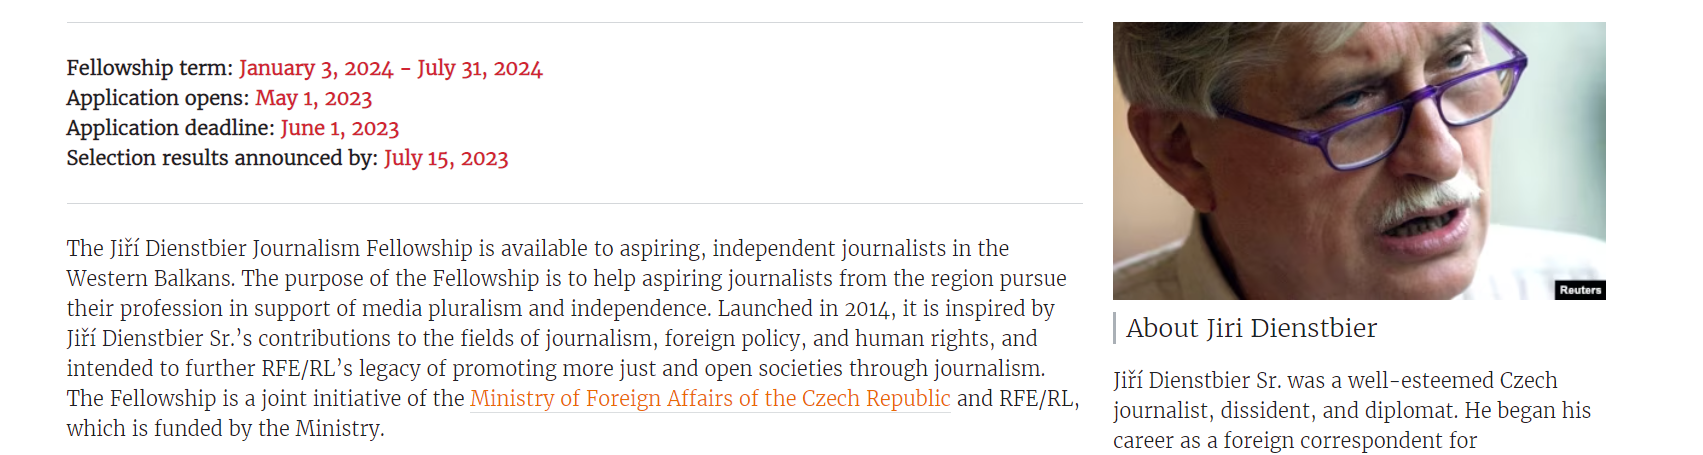 The Jiří Dienstbier Journalism Fellowship